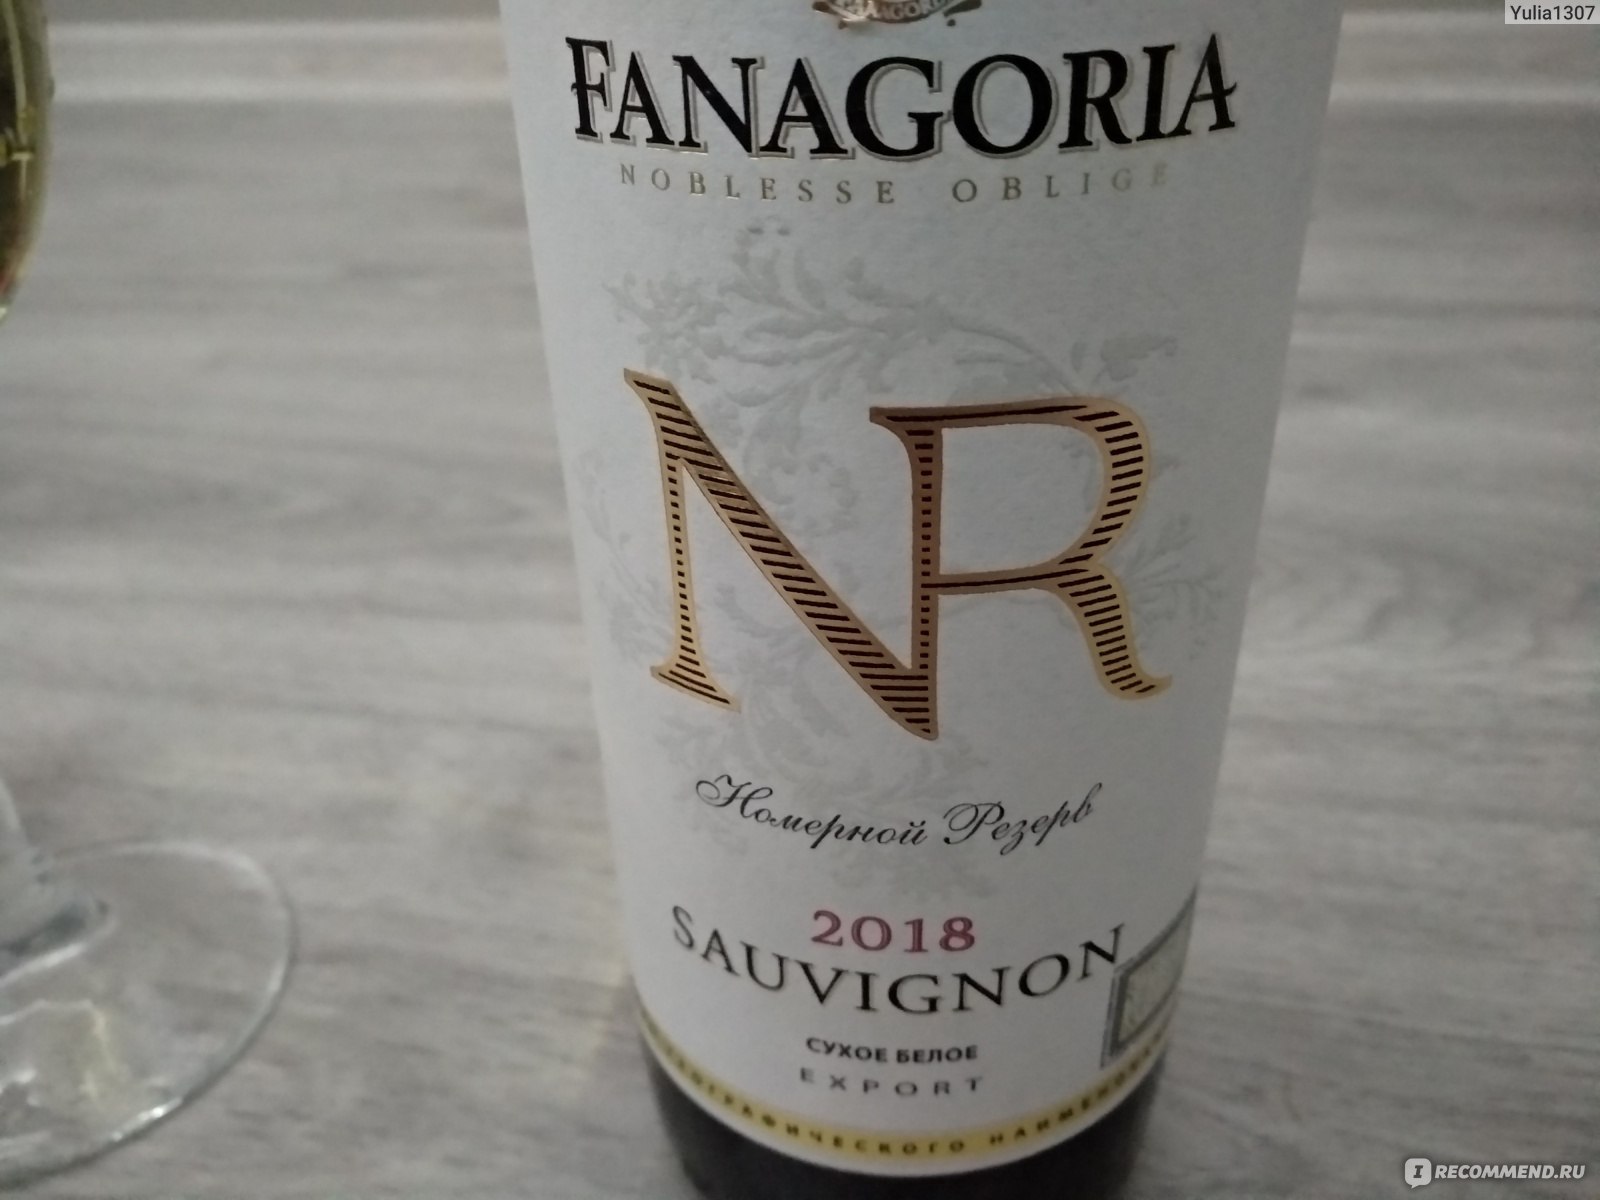 Фанагория белое вино 2018